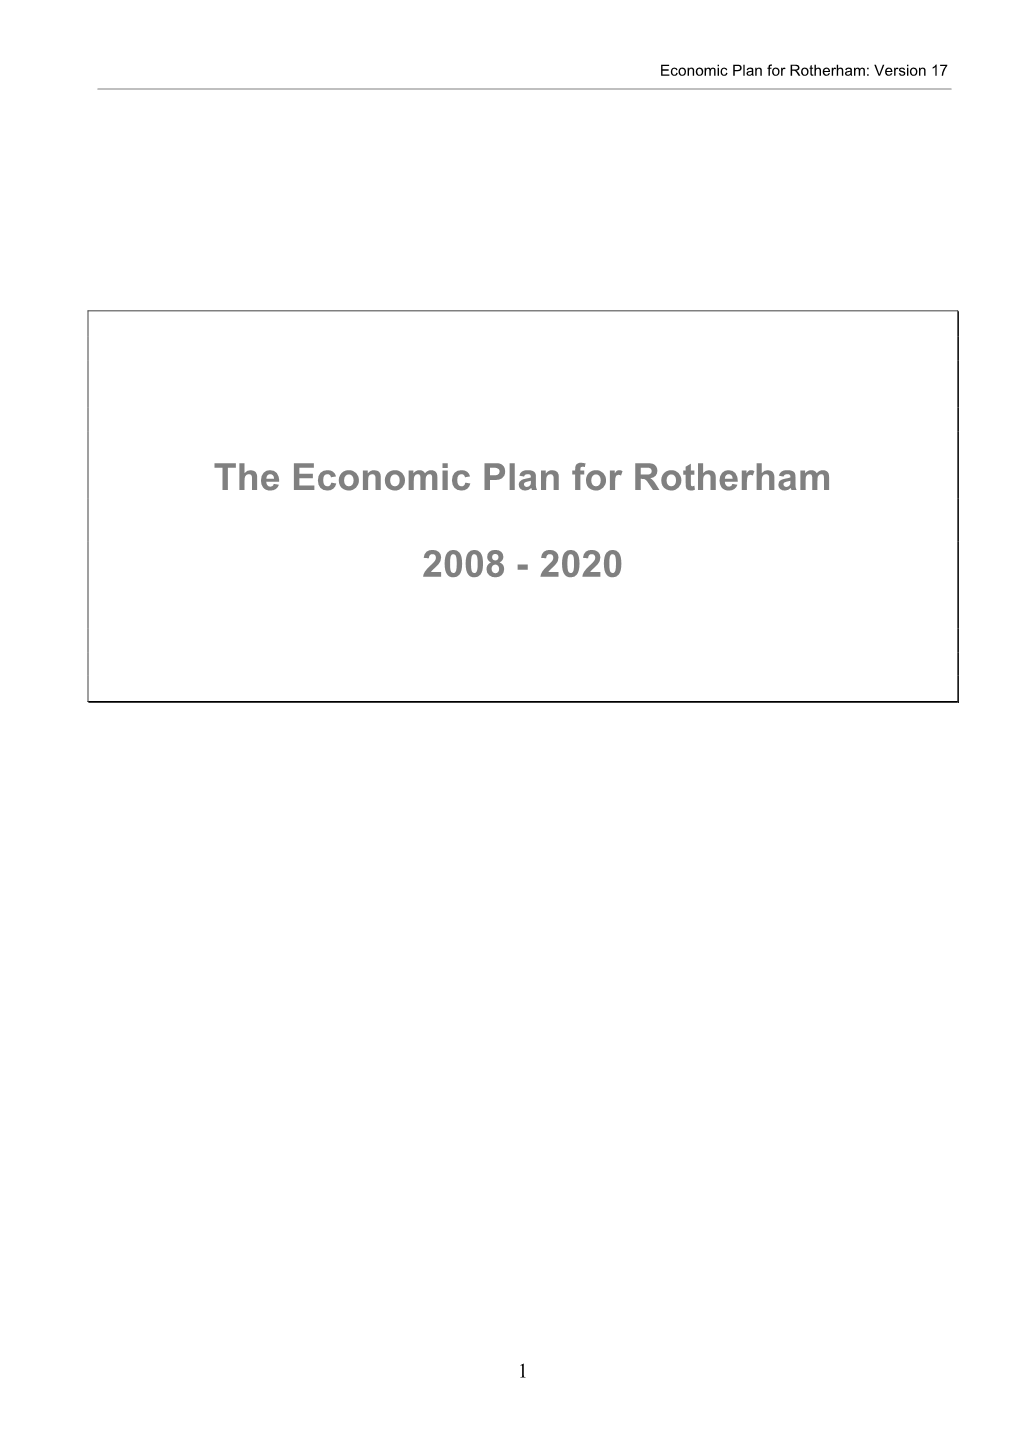 The Economic Plan for Rotherham 2008